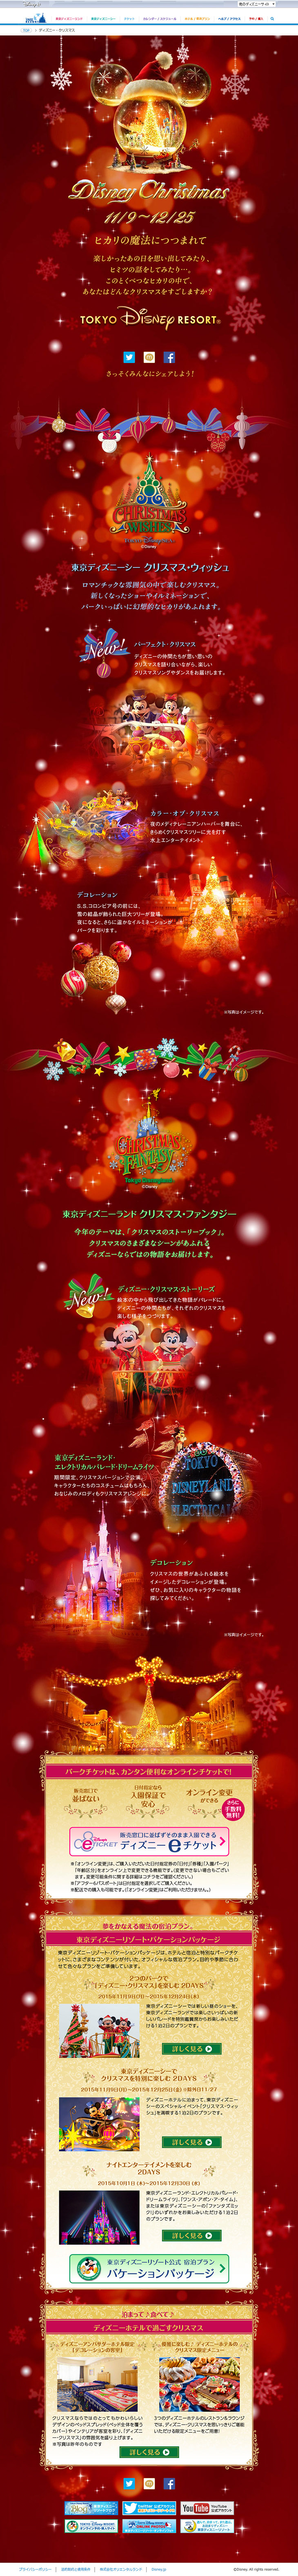 Disney Christmas2015_pc_1